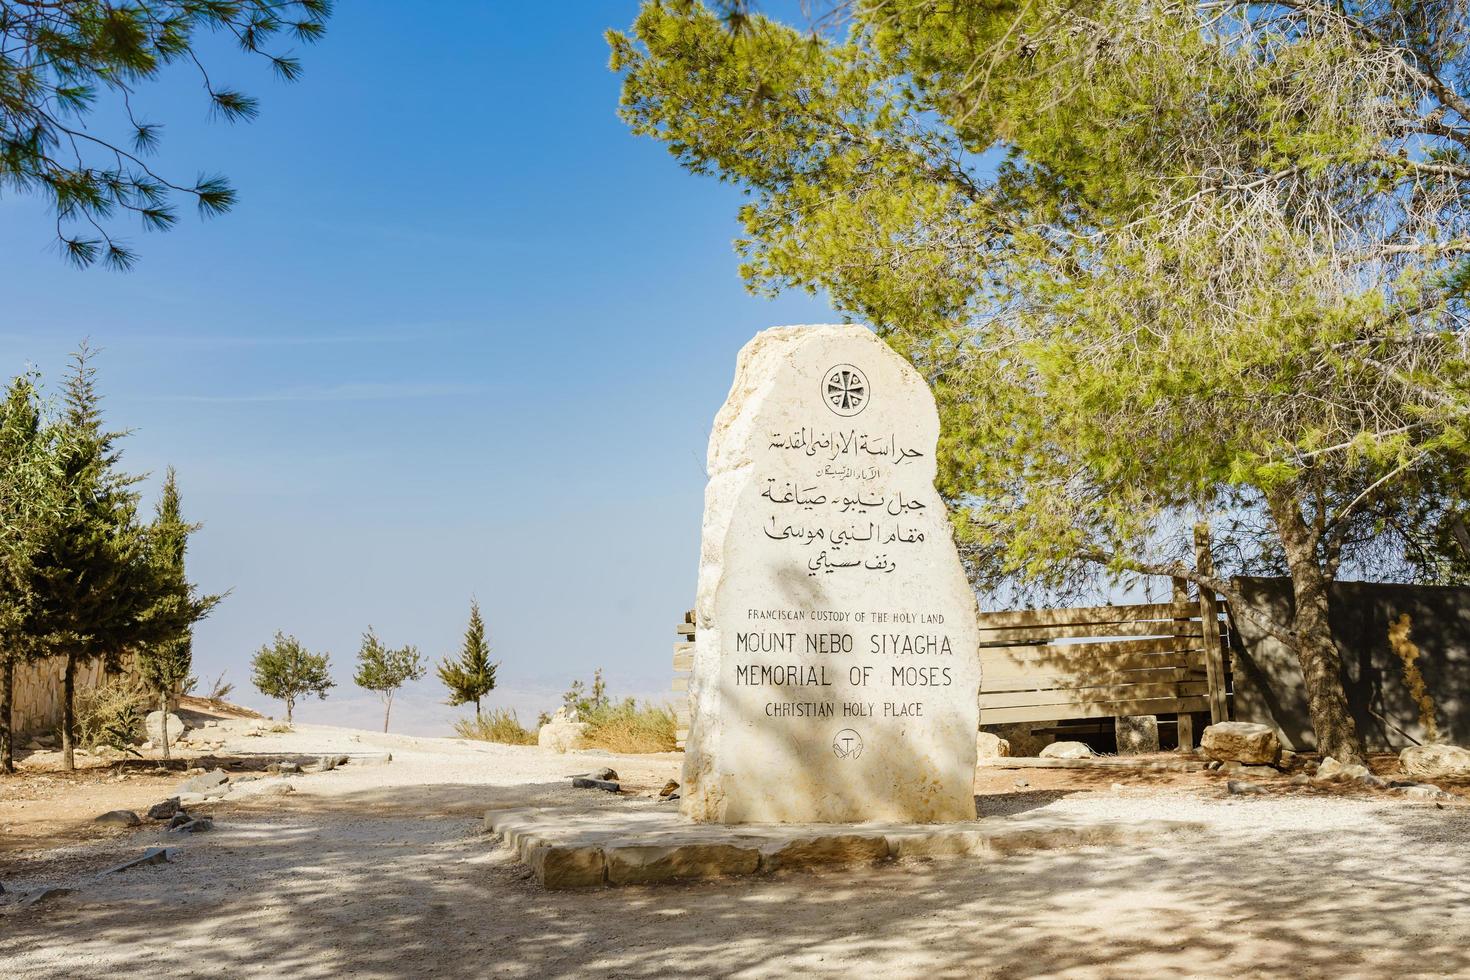 pietra all'ingresso del monte nebo, siyagha memorial of moses, jordan foto